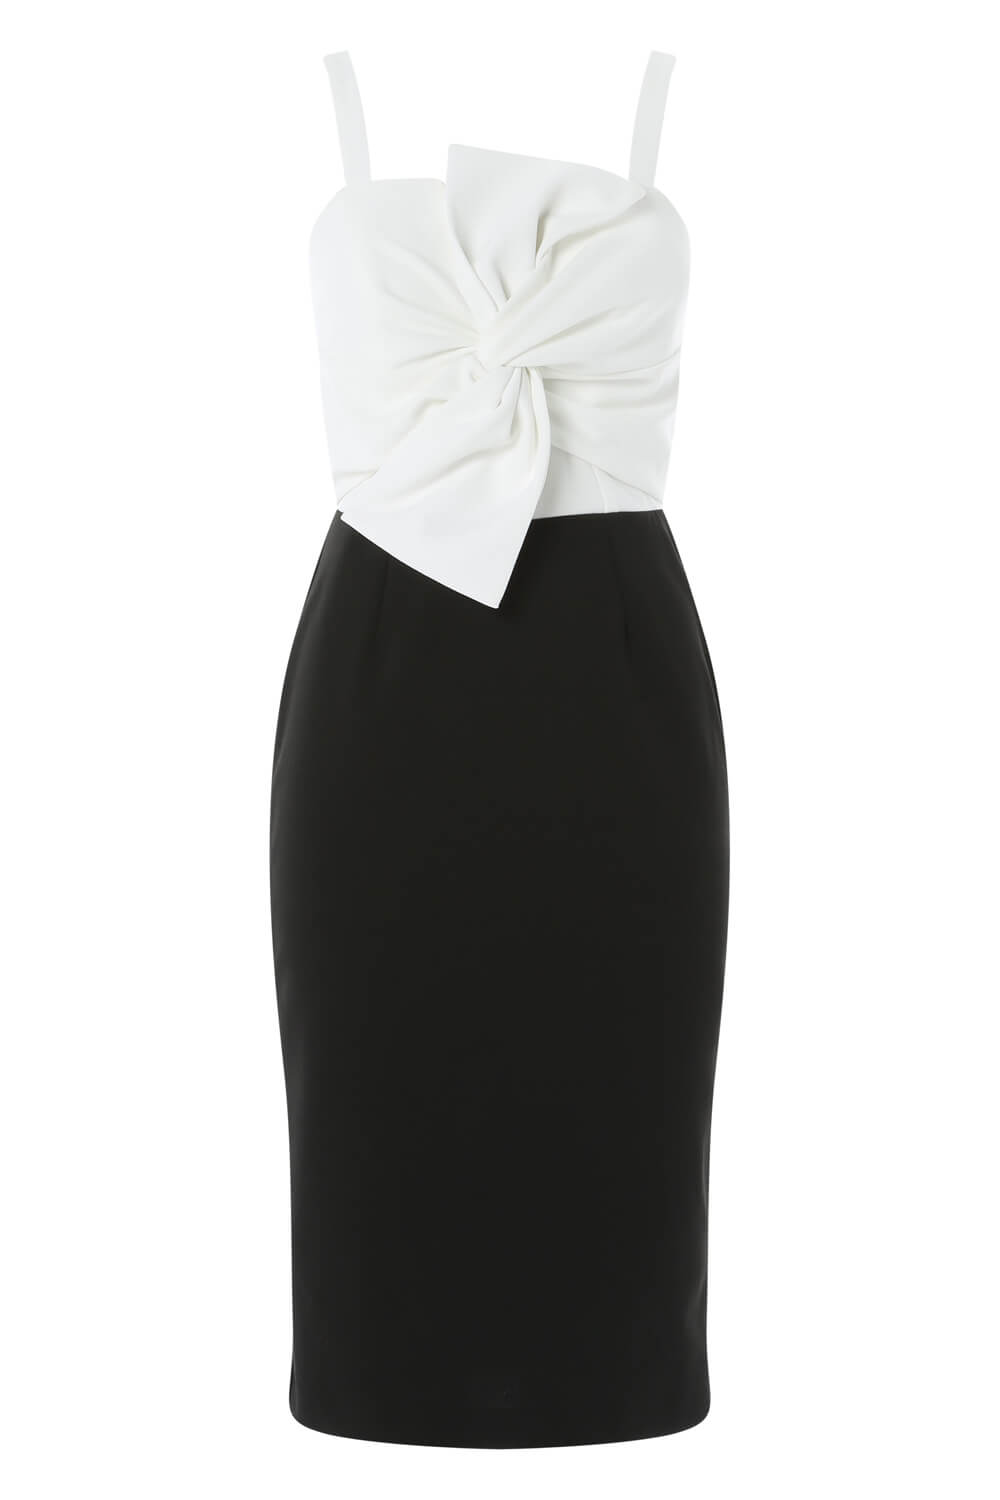 Black Bow Detail Dress, Image 5 of 5